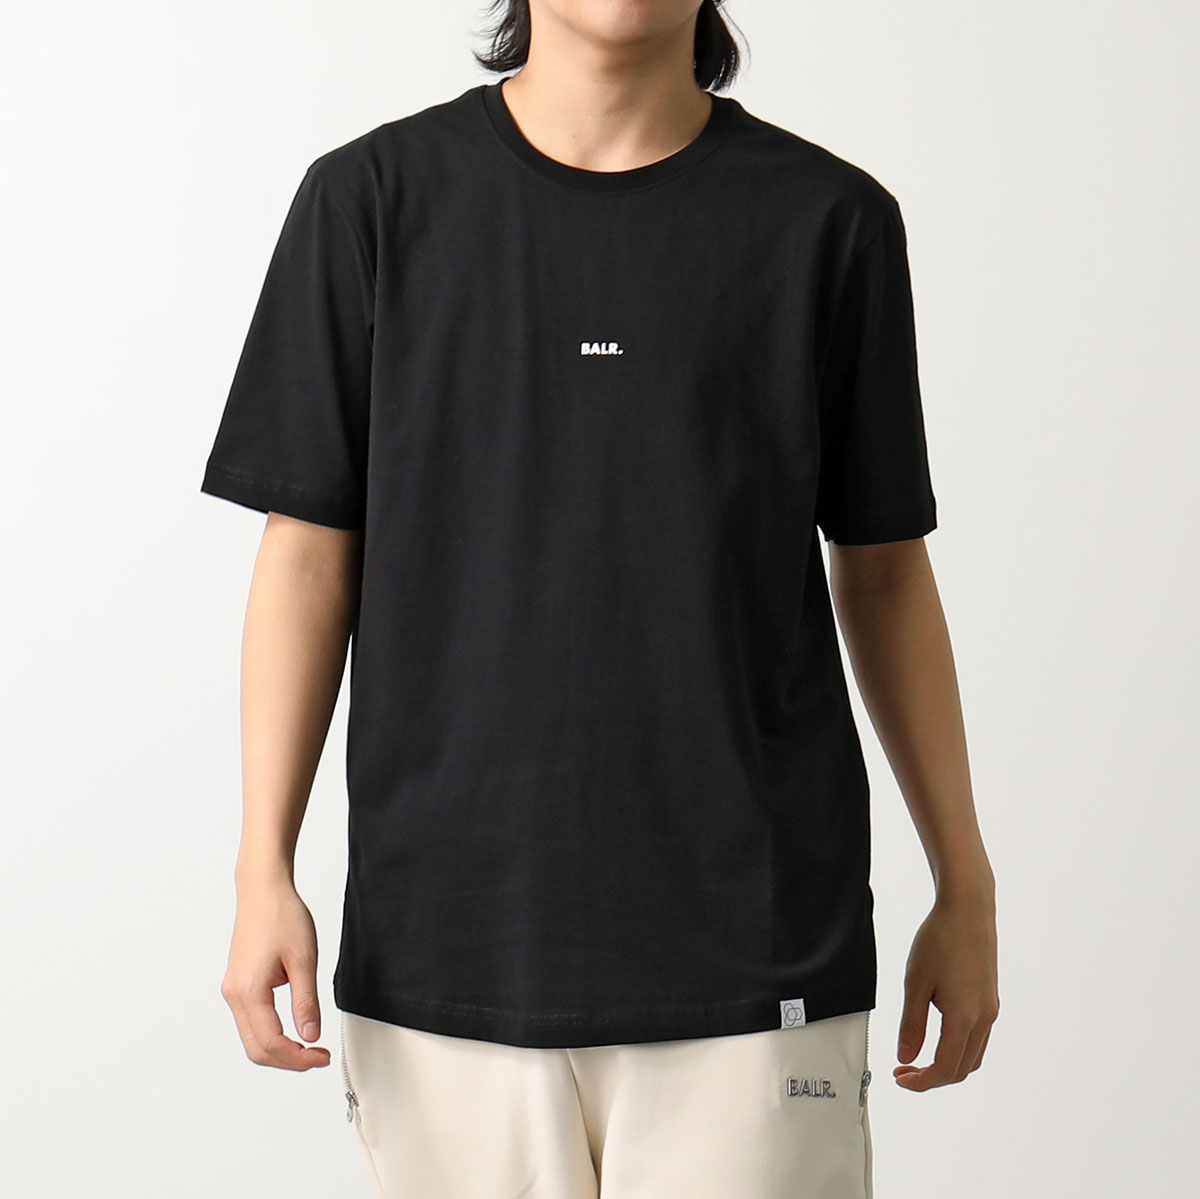 BALR. ボーラー 半袖 Tシャツ Brand Slim Fit T-Shirt B1112 12...